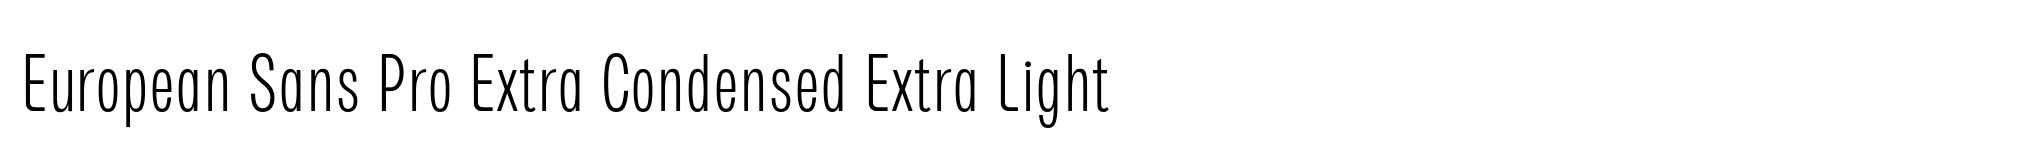 European Sans Pro Extra Condensed Extra Light image